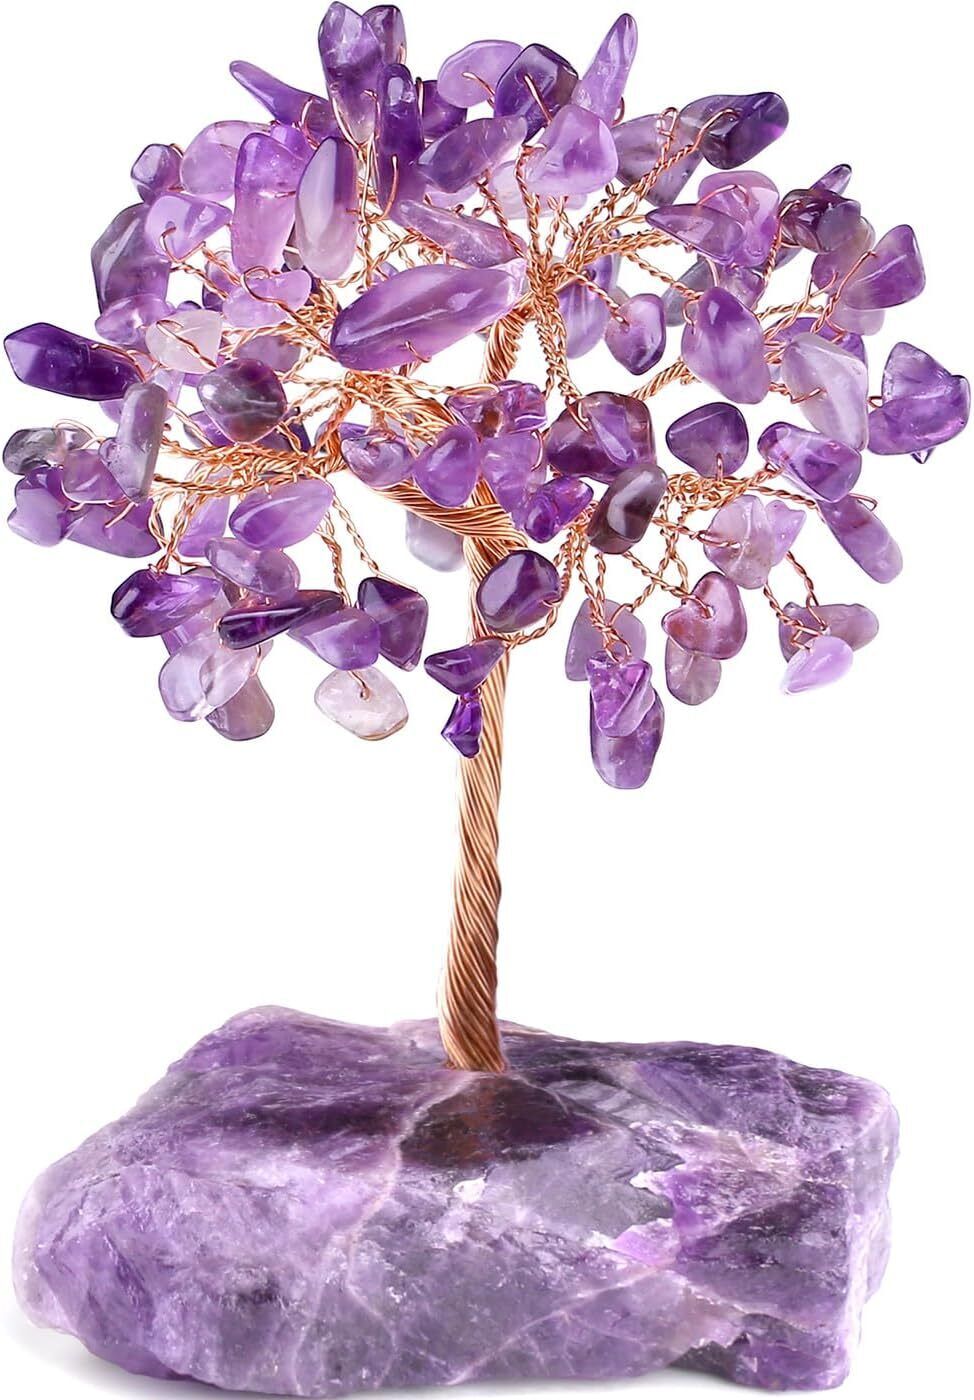 Amethyst Crystal Tree Handmade Gift Art Energy  Healing  Stones Reiki Natural